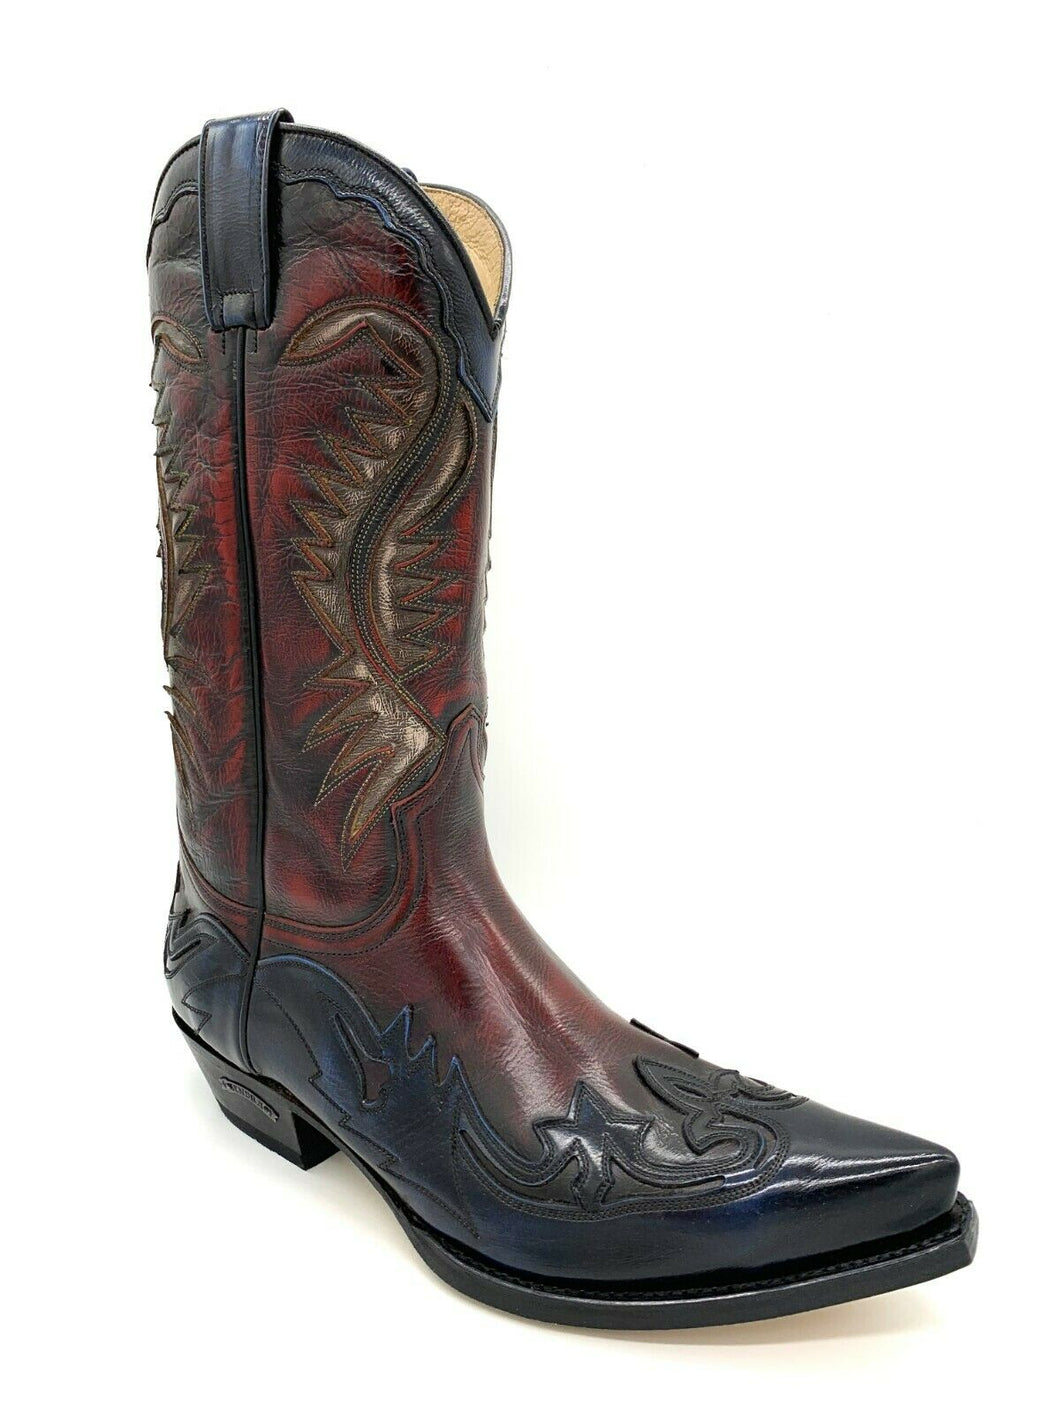 Sendra Stiefel Western Cowboystiefel Biker Boots Exklusiv & Limitiert Blau Rot